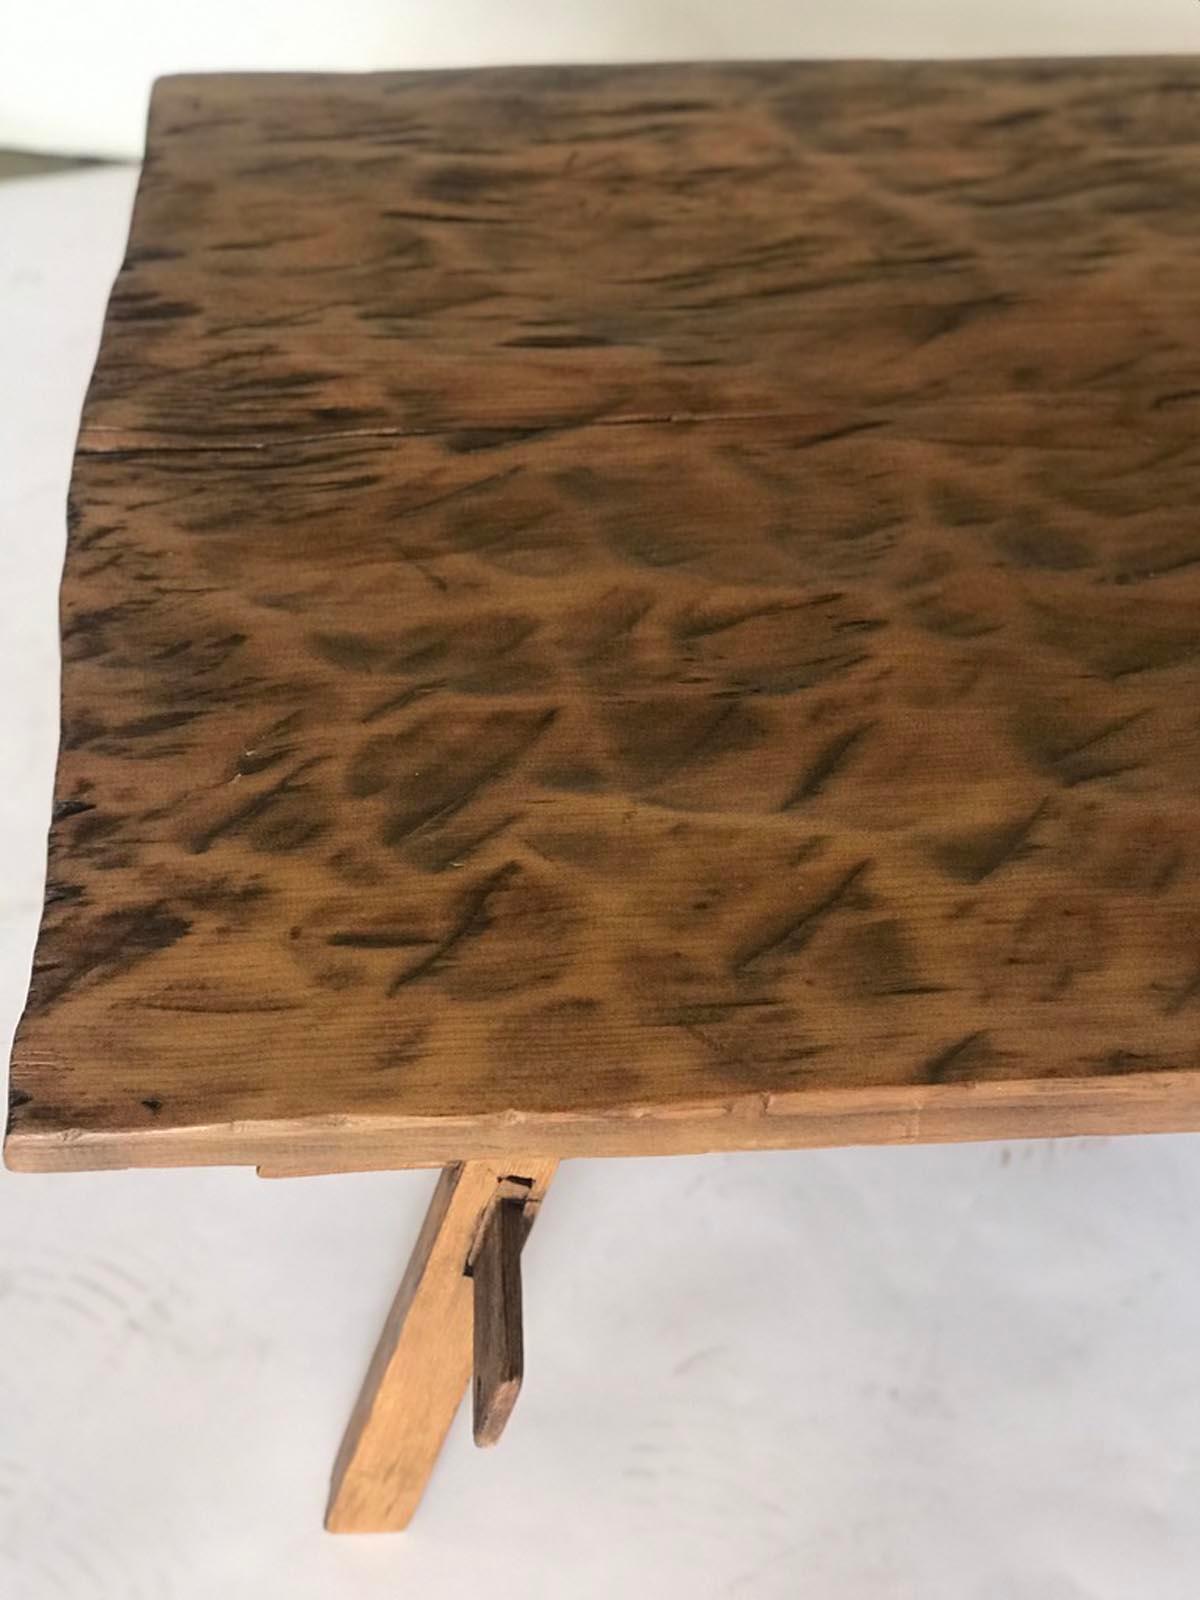 Wood One Wide Board Rustic Coffee Table